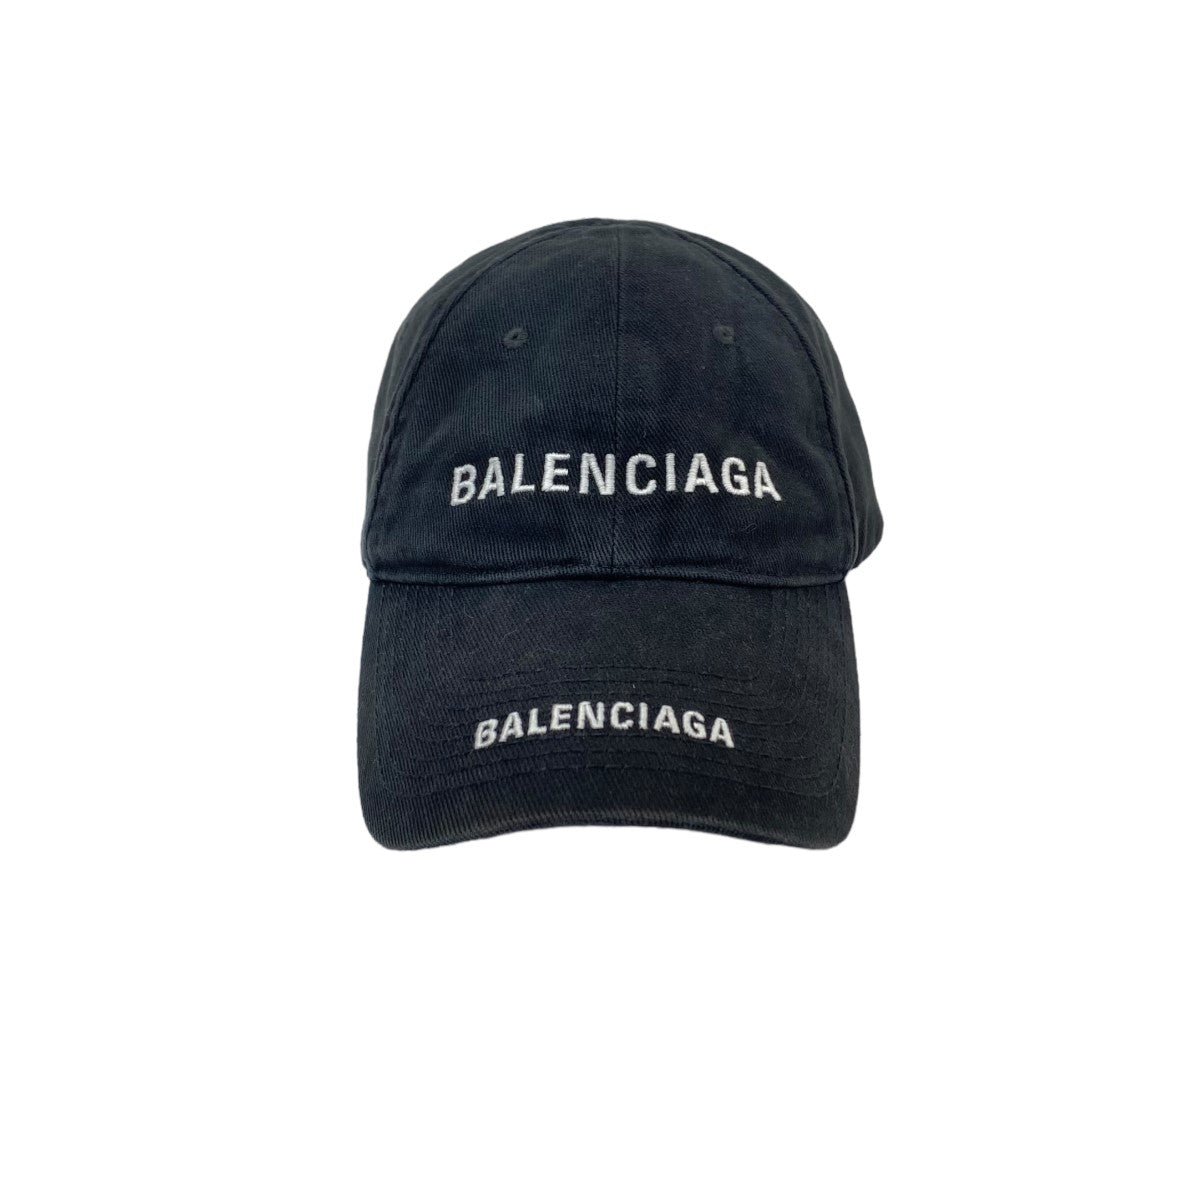 BALENCIAGA(バレンシアガ) Double Logoキャップ ウォッシュアウト加工